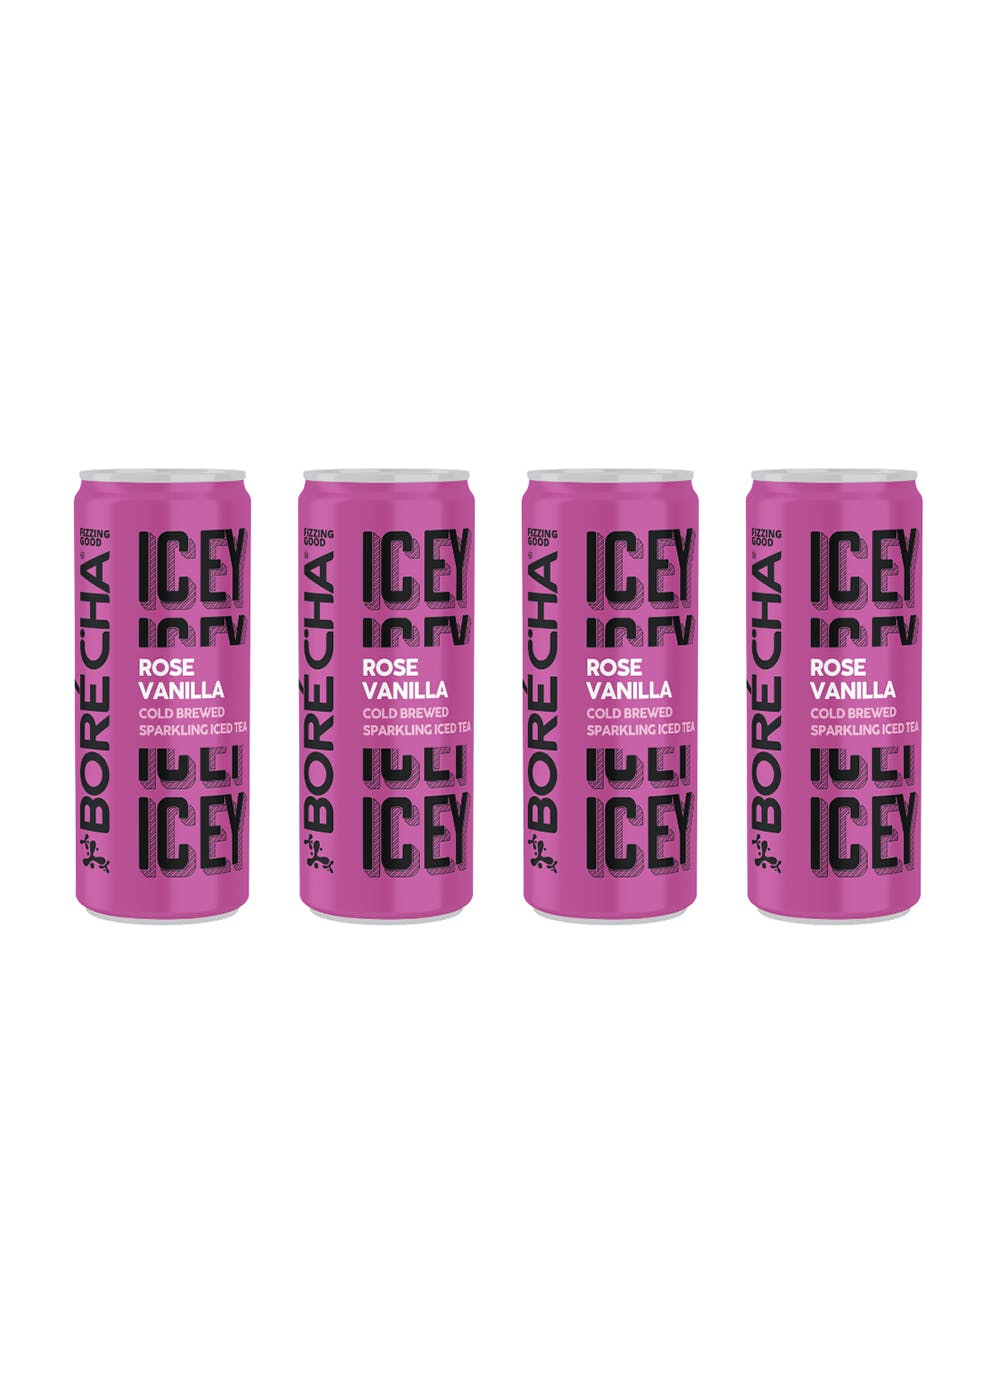 Icey Rose Vanilla Iced Tea - Pack of 4